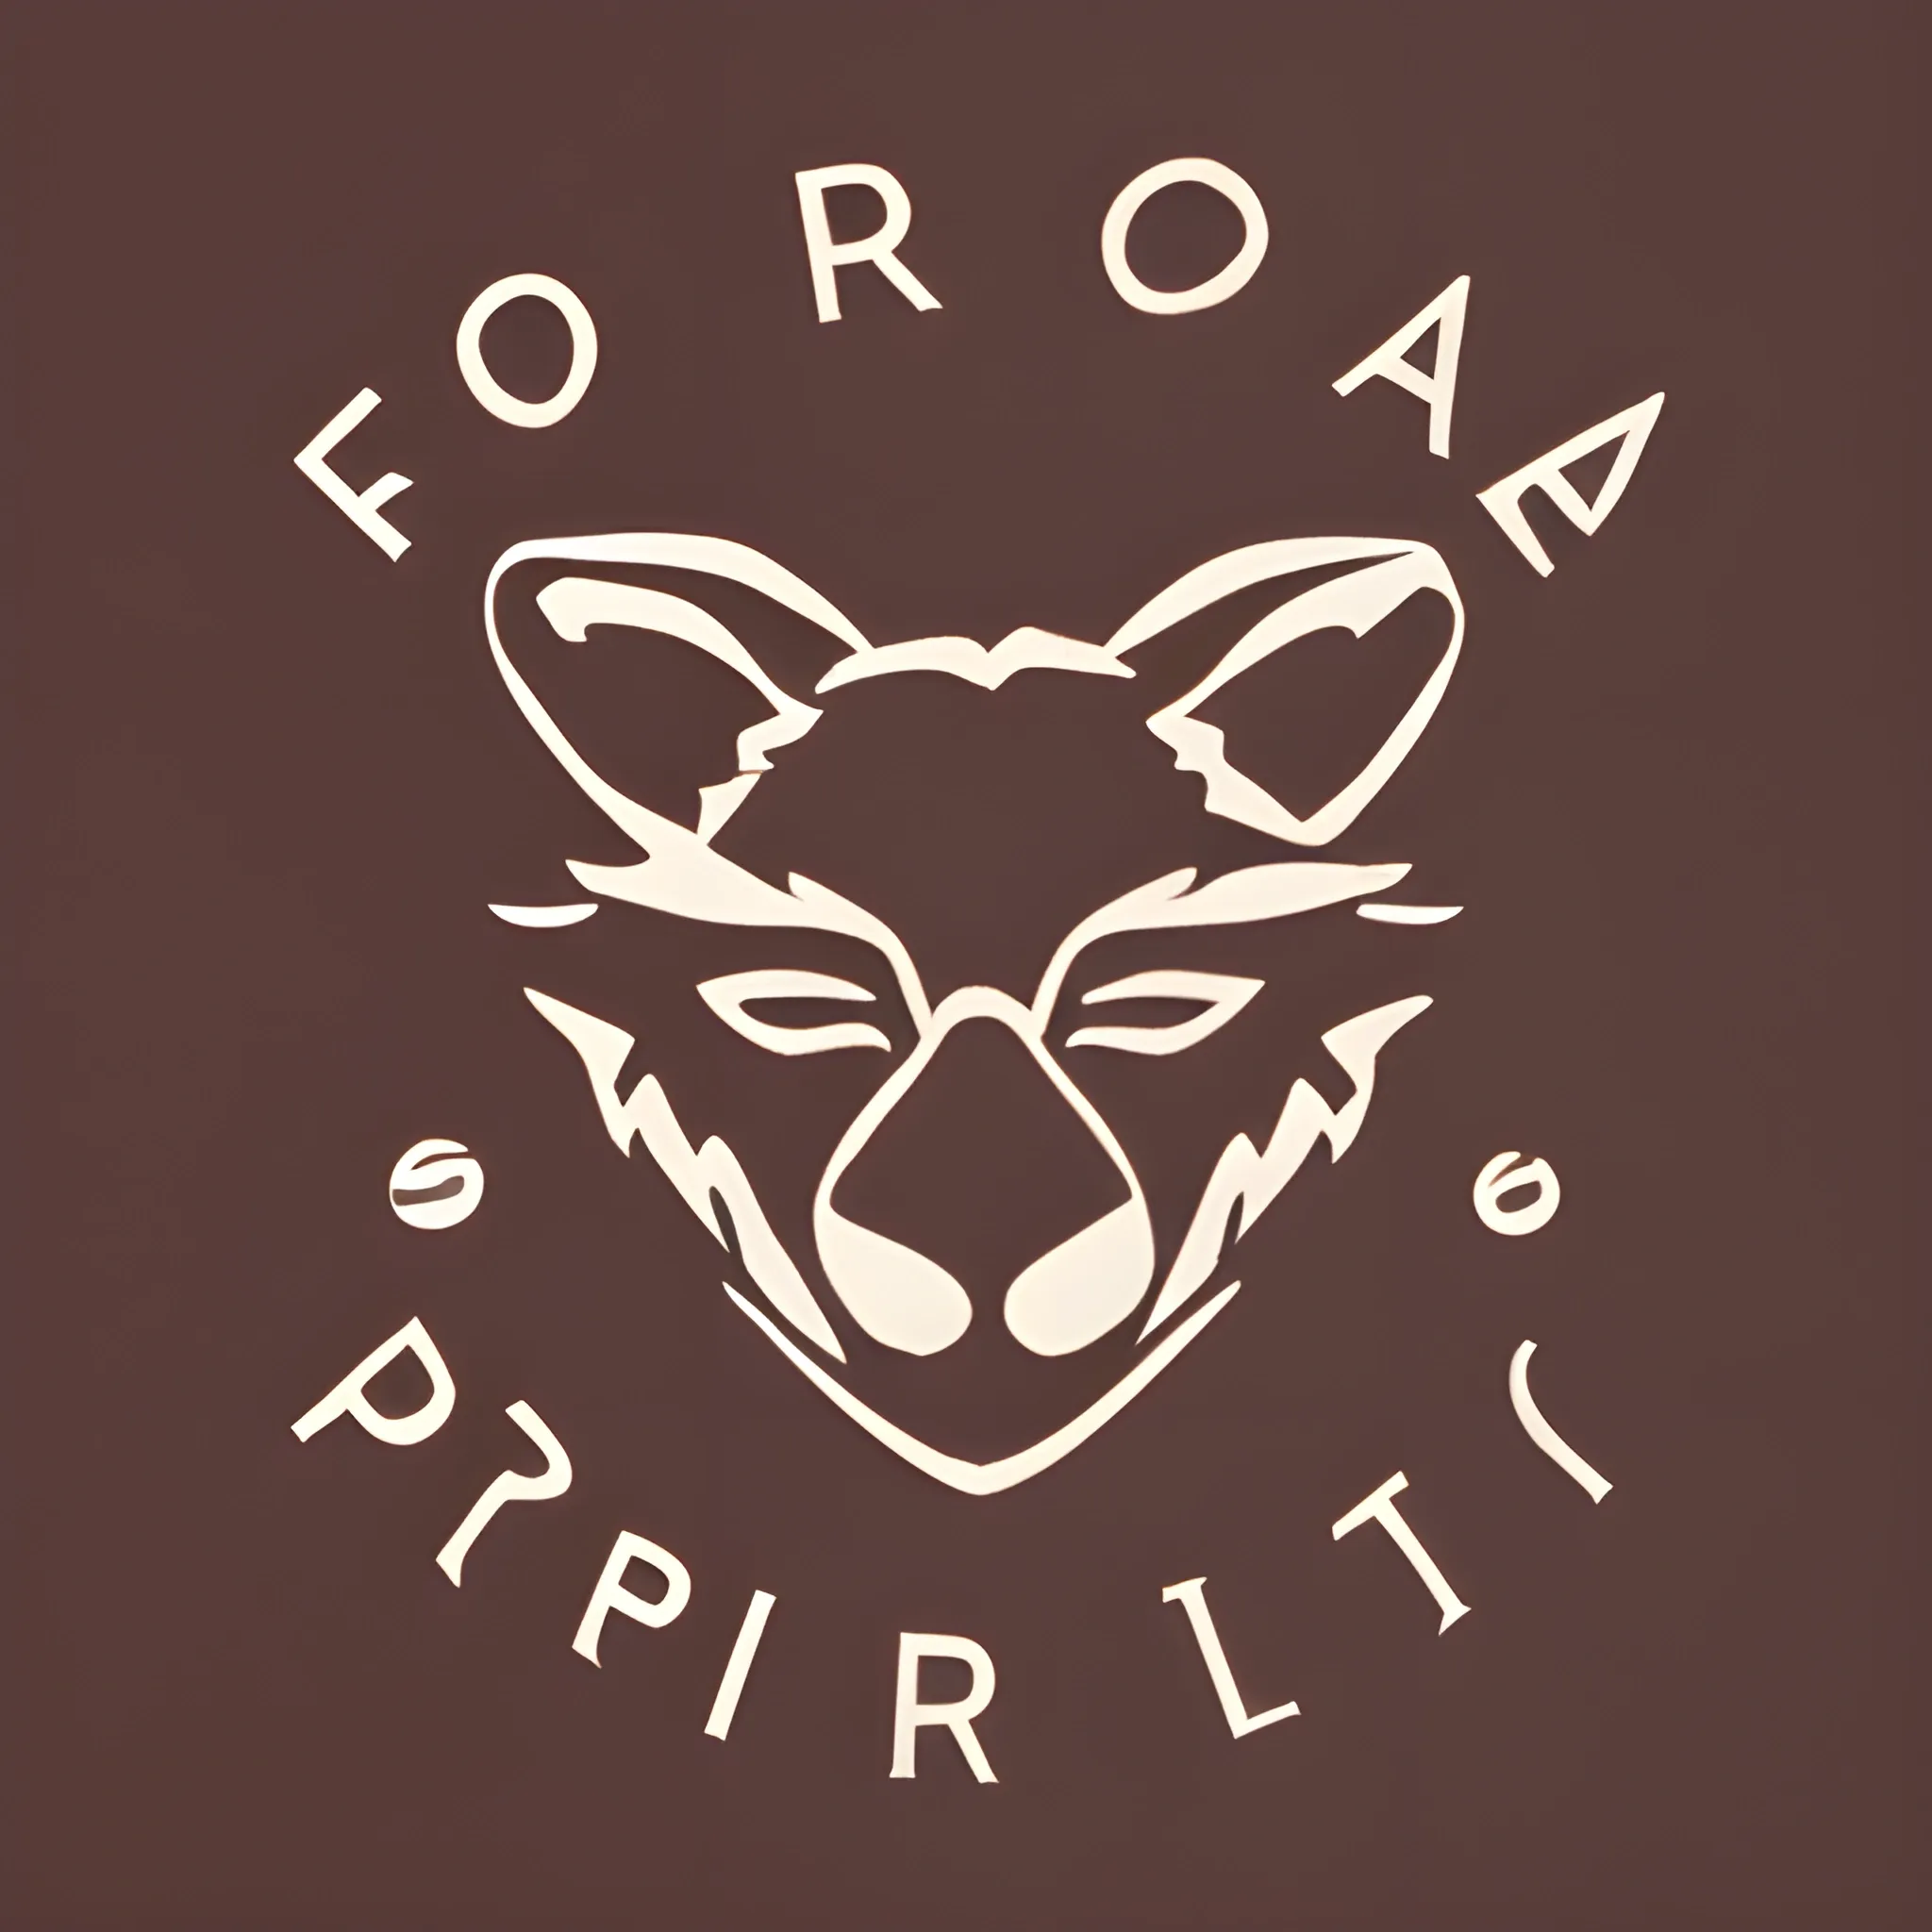 Corporate logo for fur